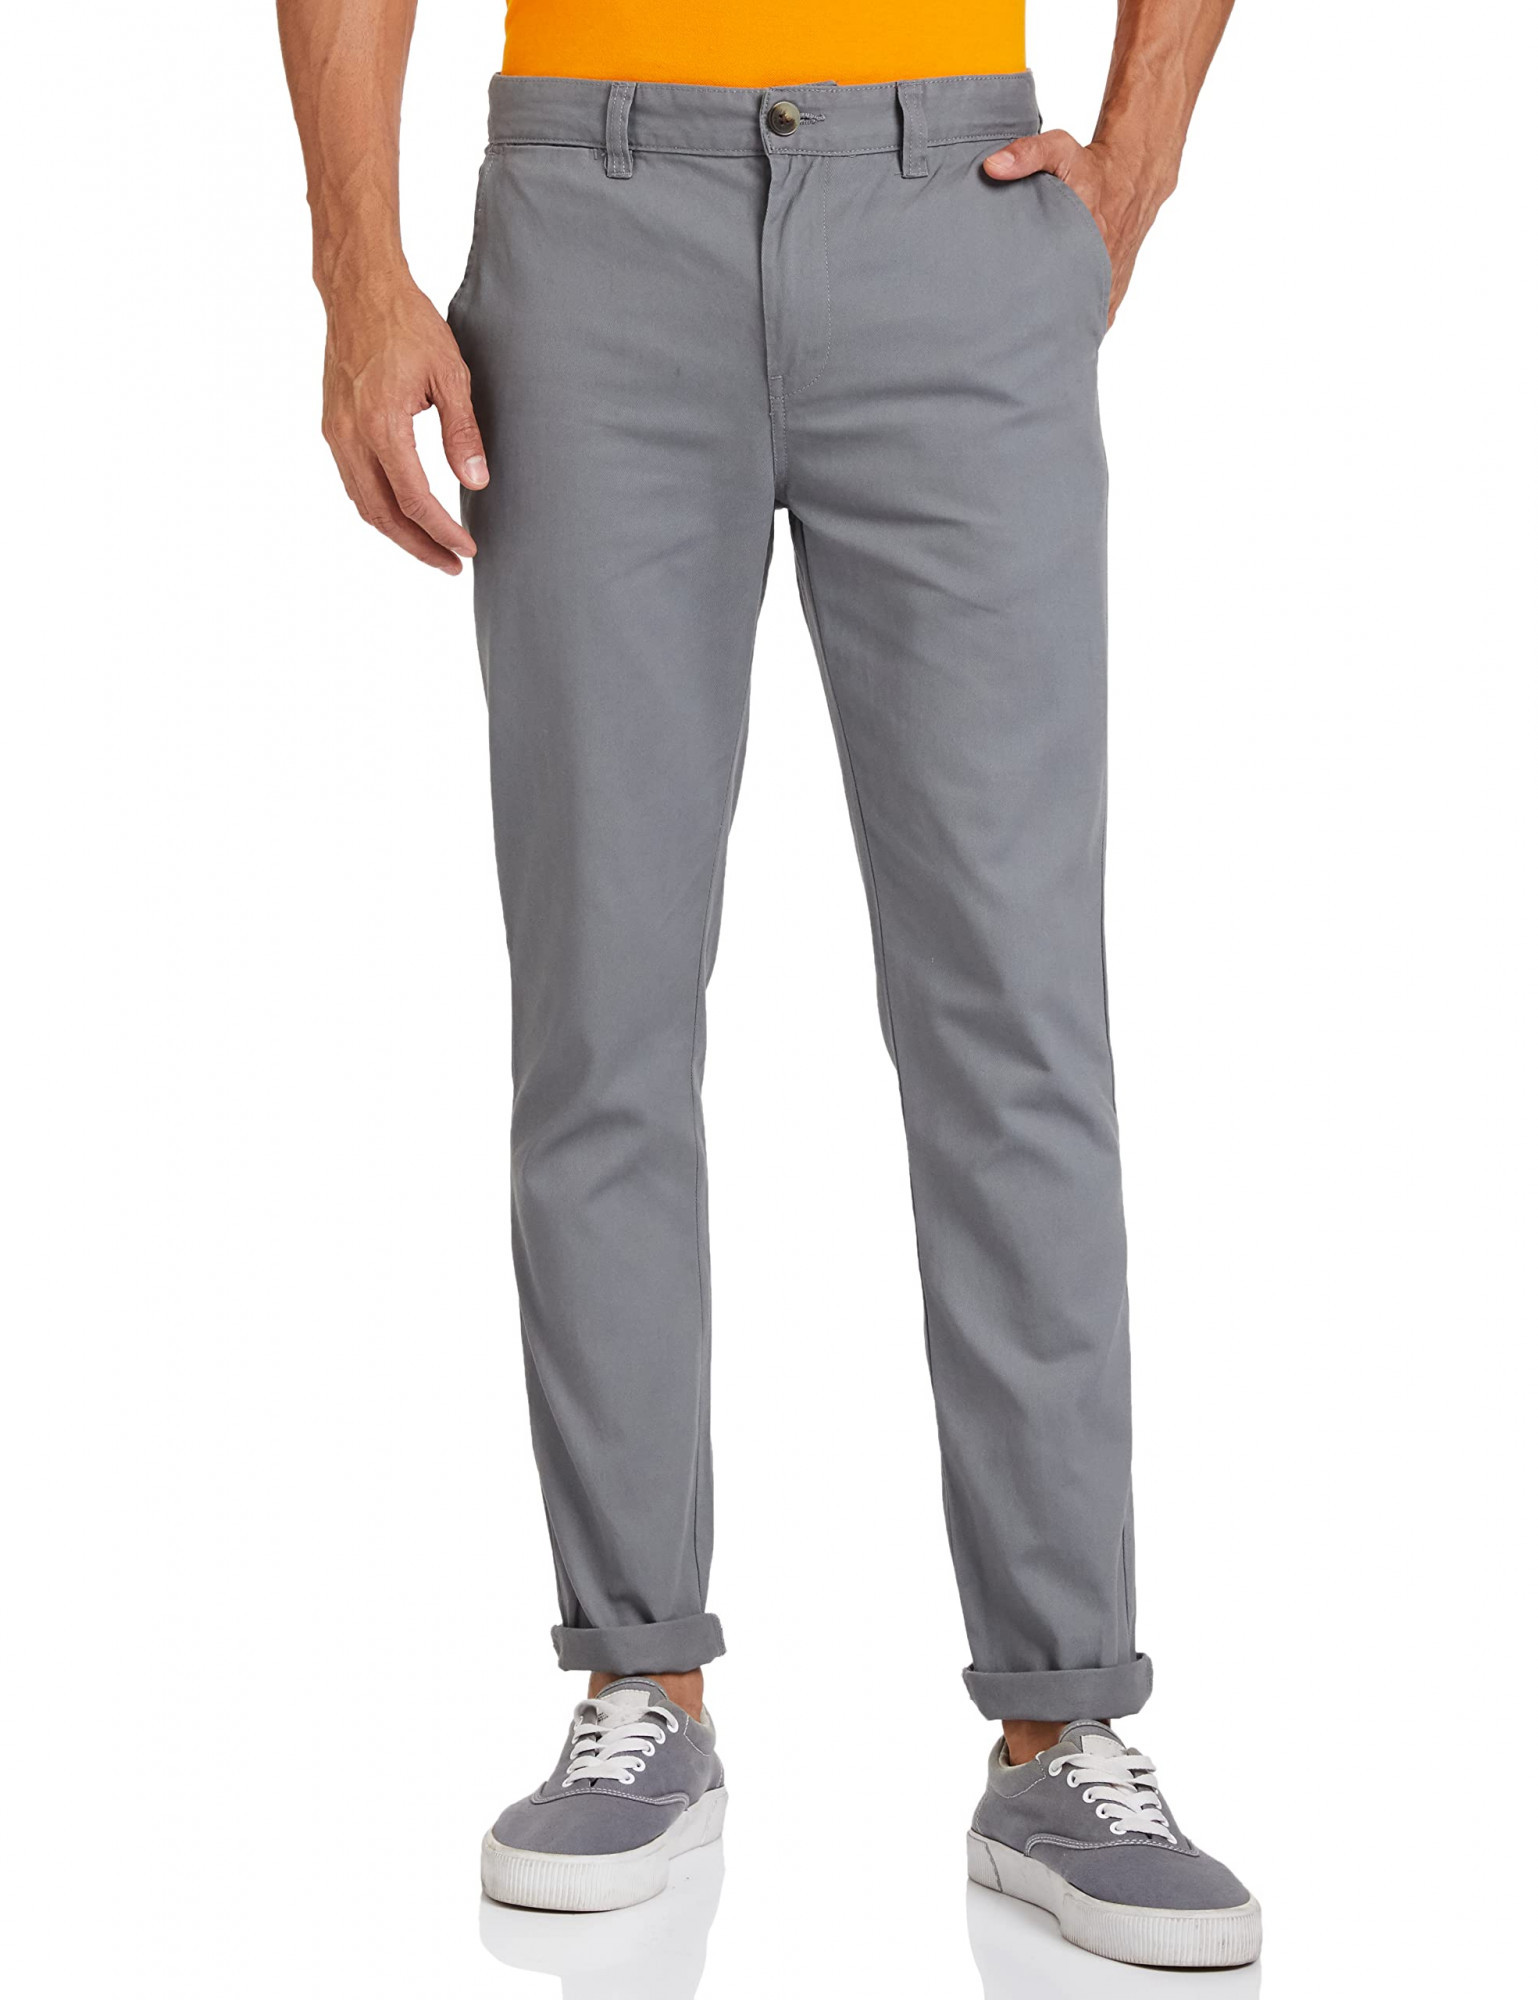 Walker and Hawkes - Men's 100% Cotton Yorkley Moleskin Trousers - Beige -  W30 Short (29'') at Amazon Men's Clothing store